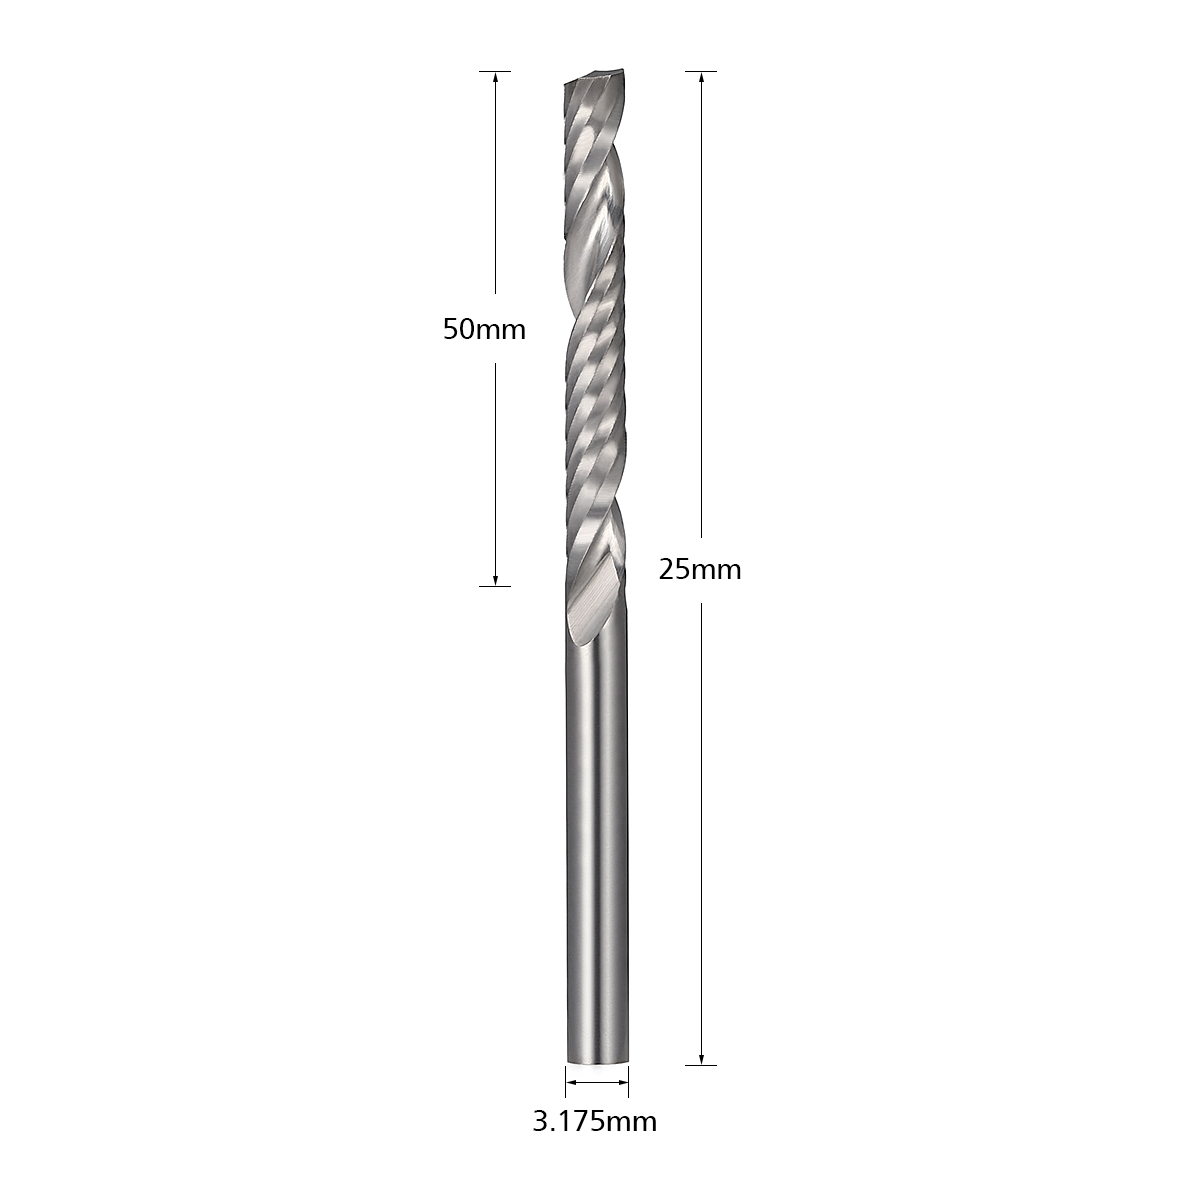 Drillpro-DB-M7-10pcs-18-Inch-Shank-End-Mill-Cutter-1-Flute-Carbide-Spiral-Milling-Cutter-1033261-9